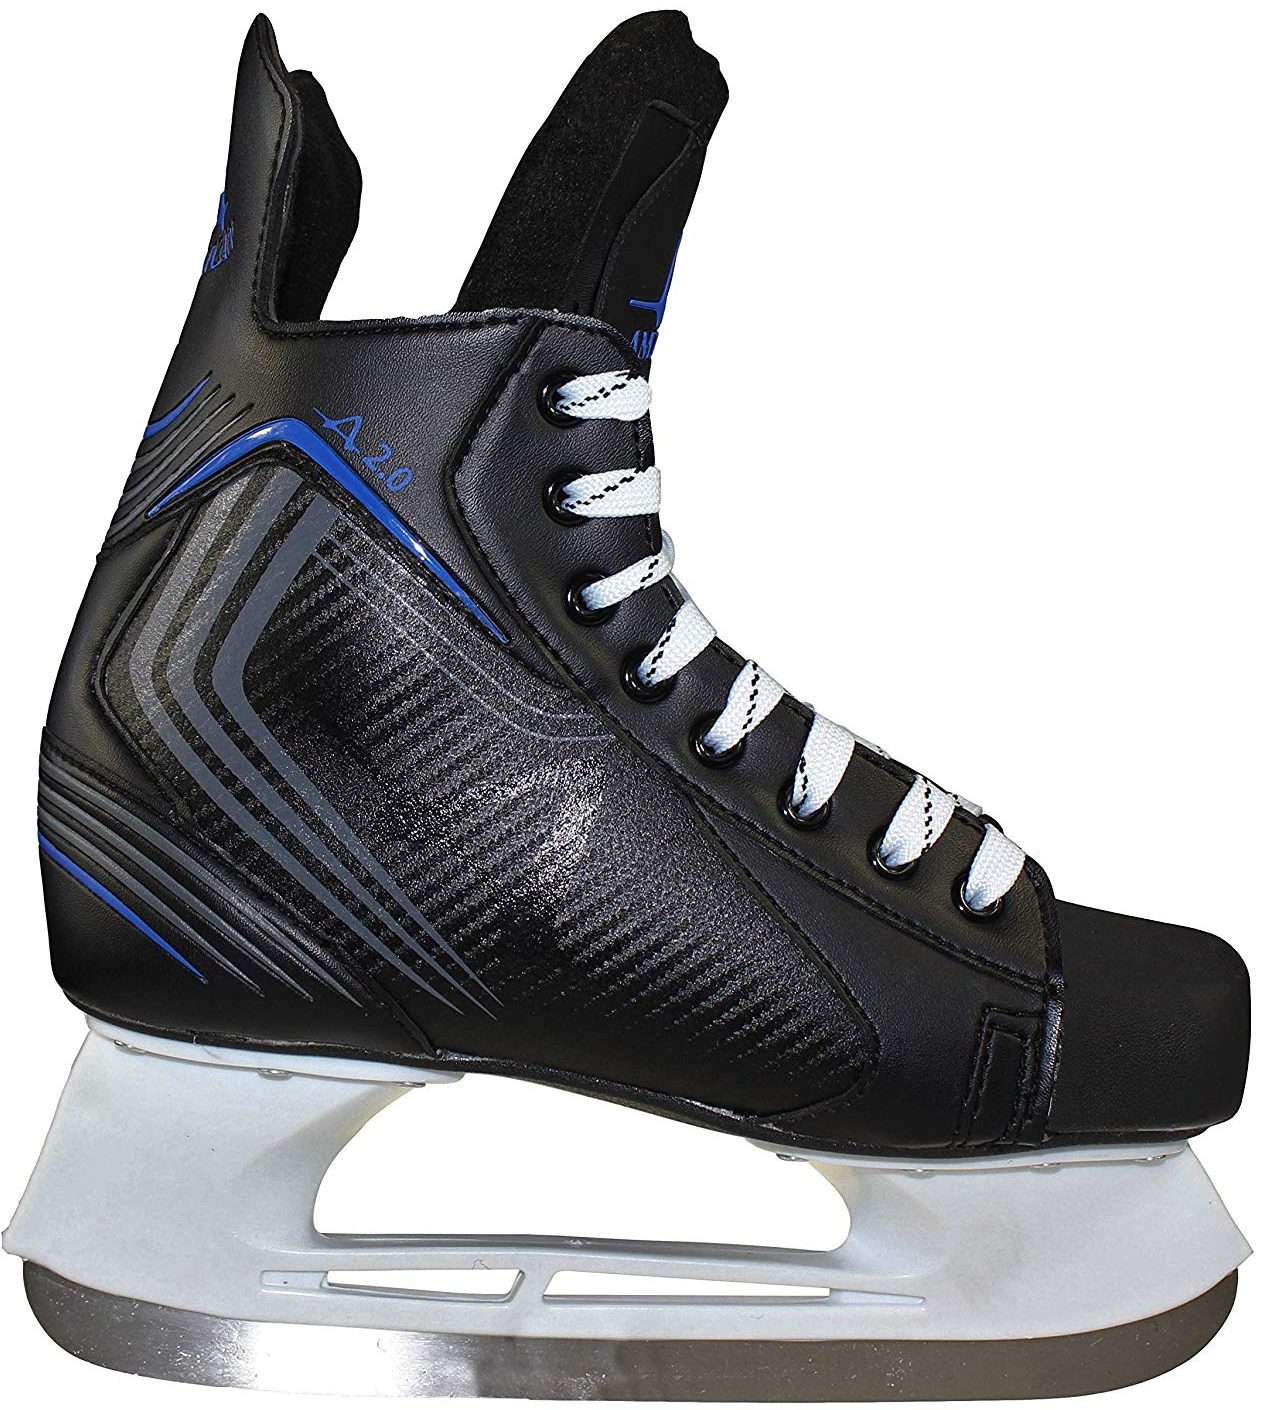 American Ice Force hockey skate